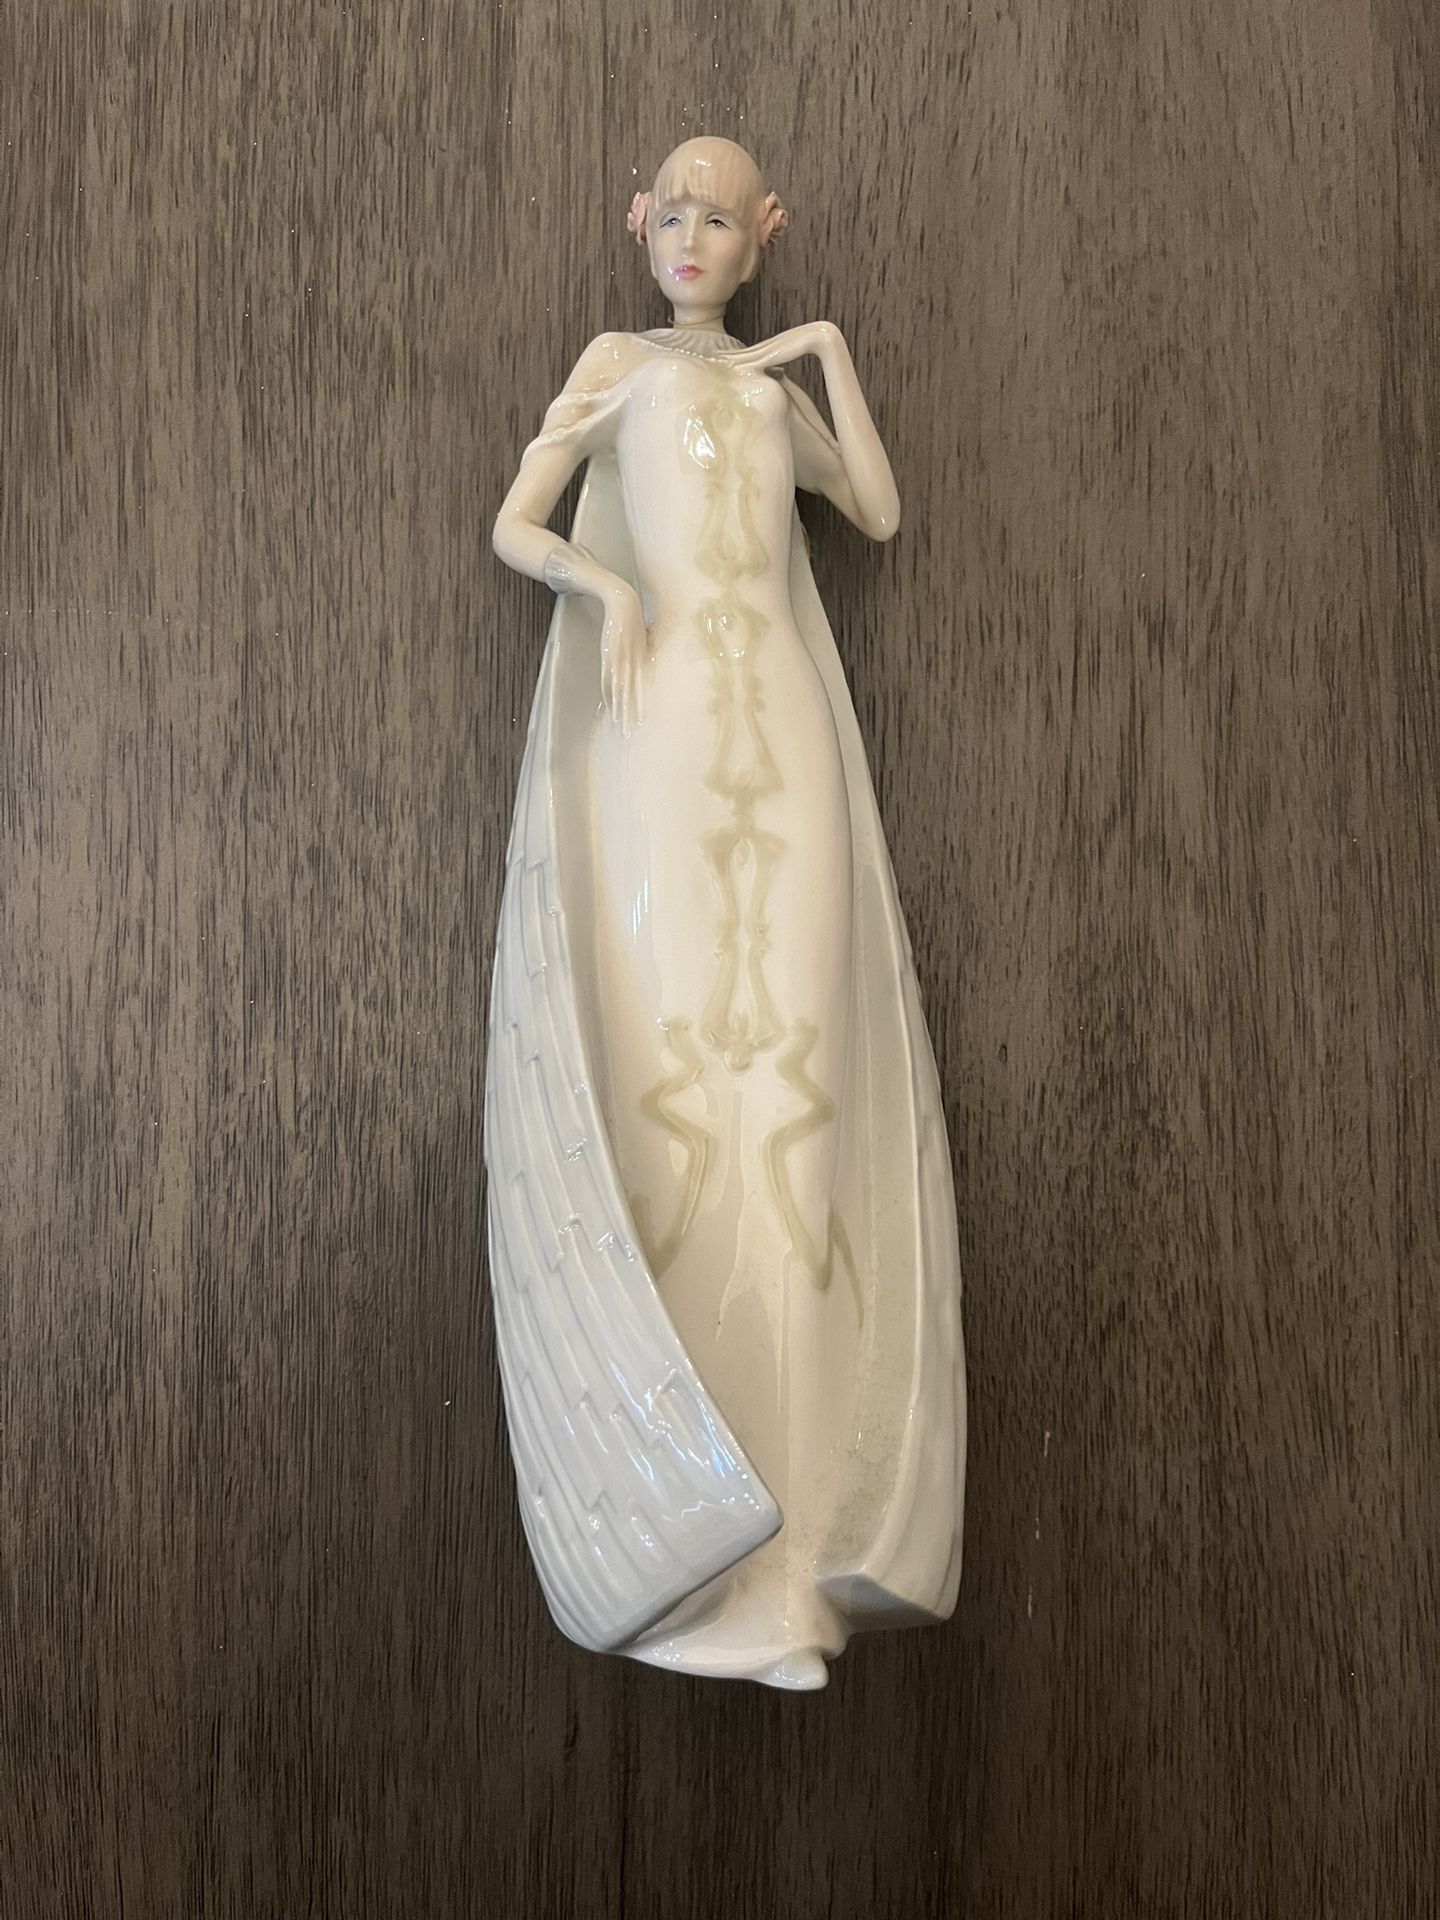 Royal Doulton Figurine $75 